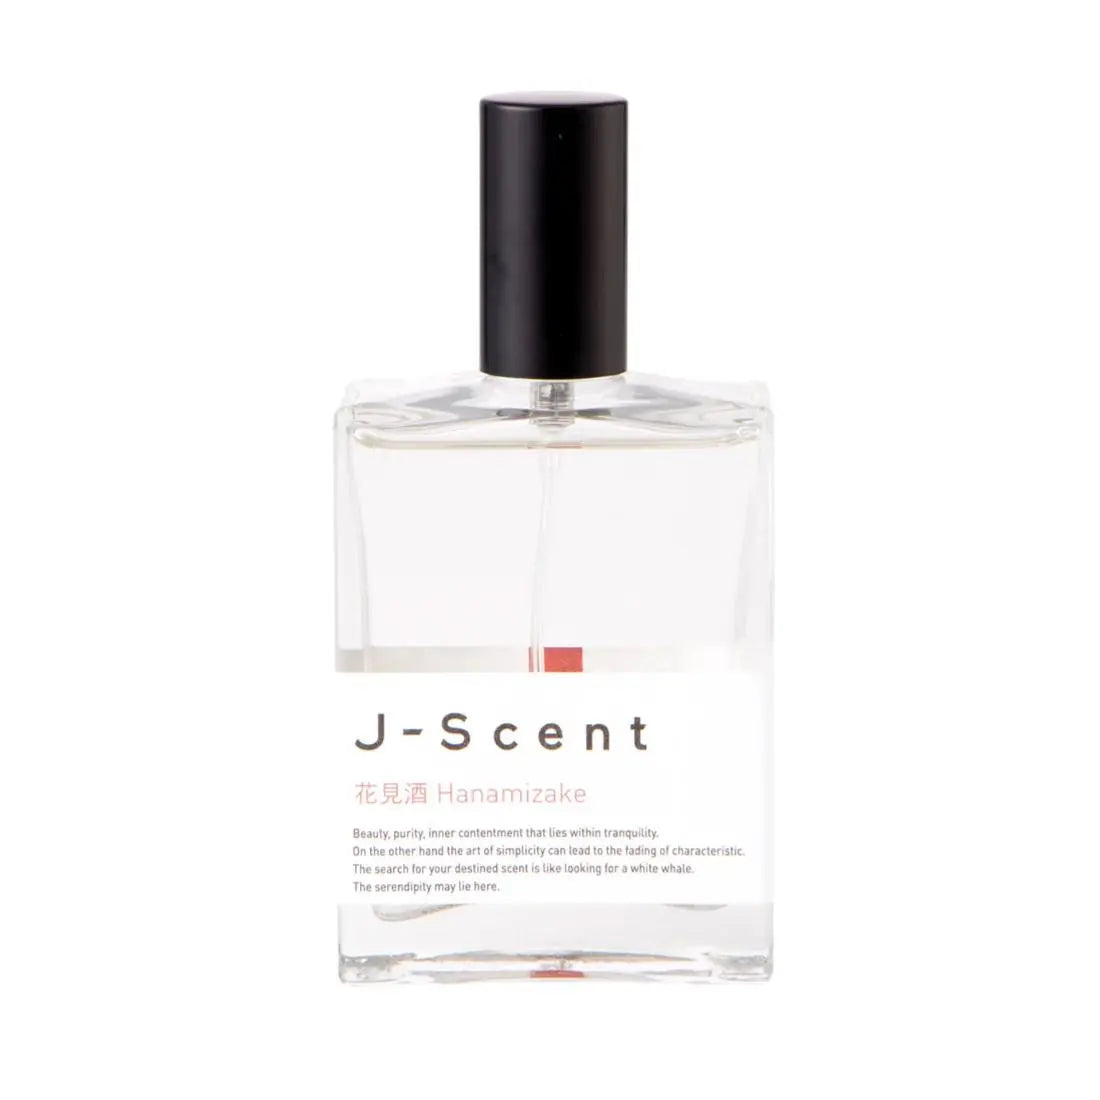 J-scent 花见酒 - 50ml